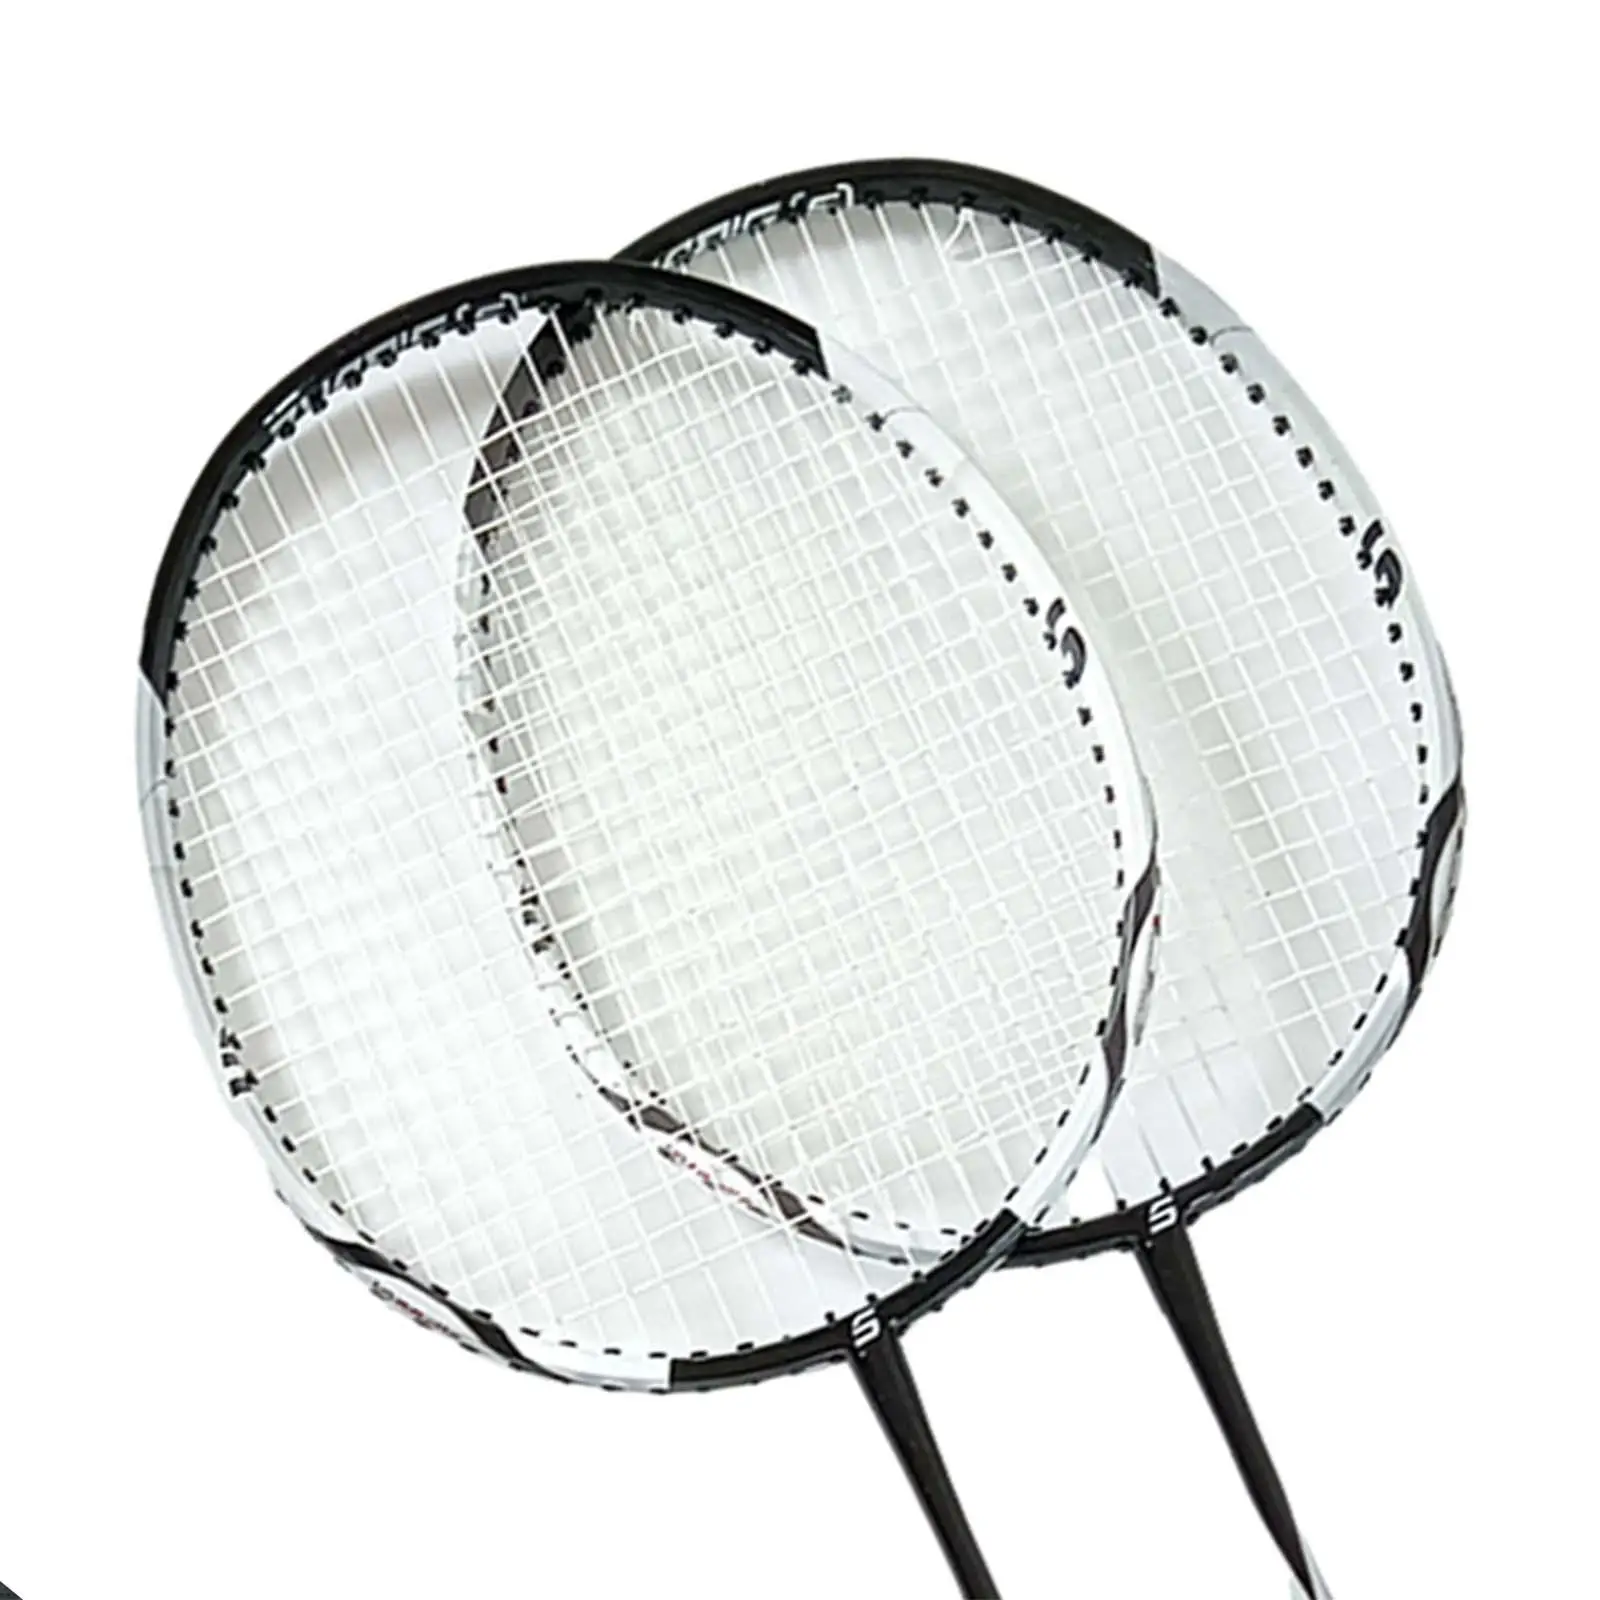 2 Pieces Badminton Rackets for Kids Adults Lightweight Badminton Racquet Set B Carbon Aluminum